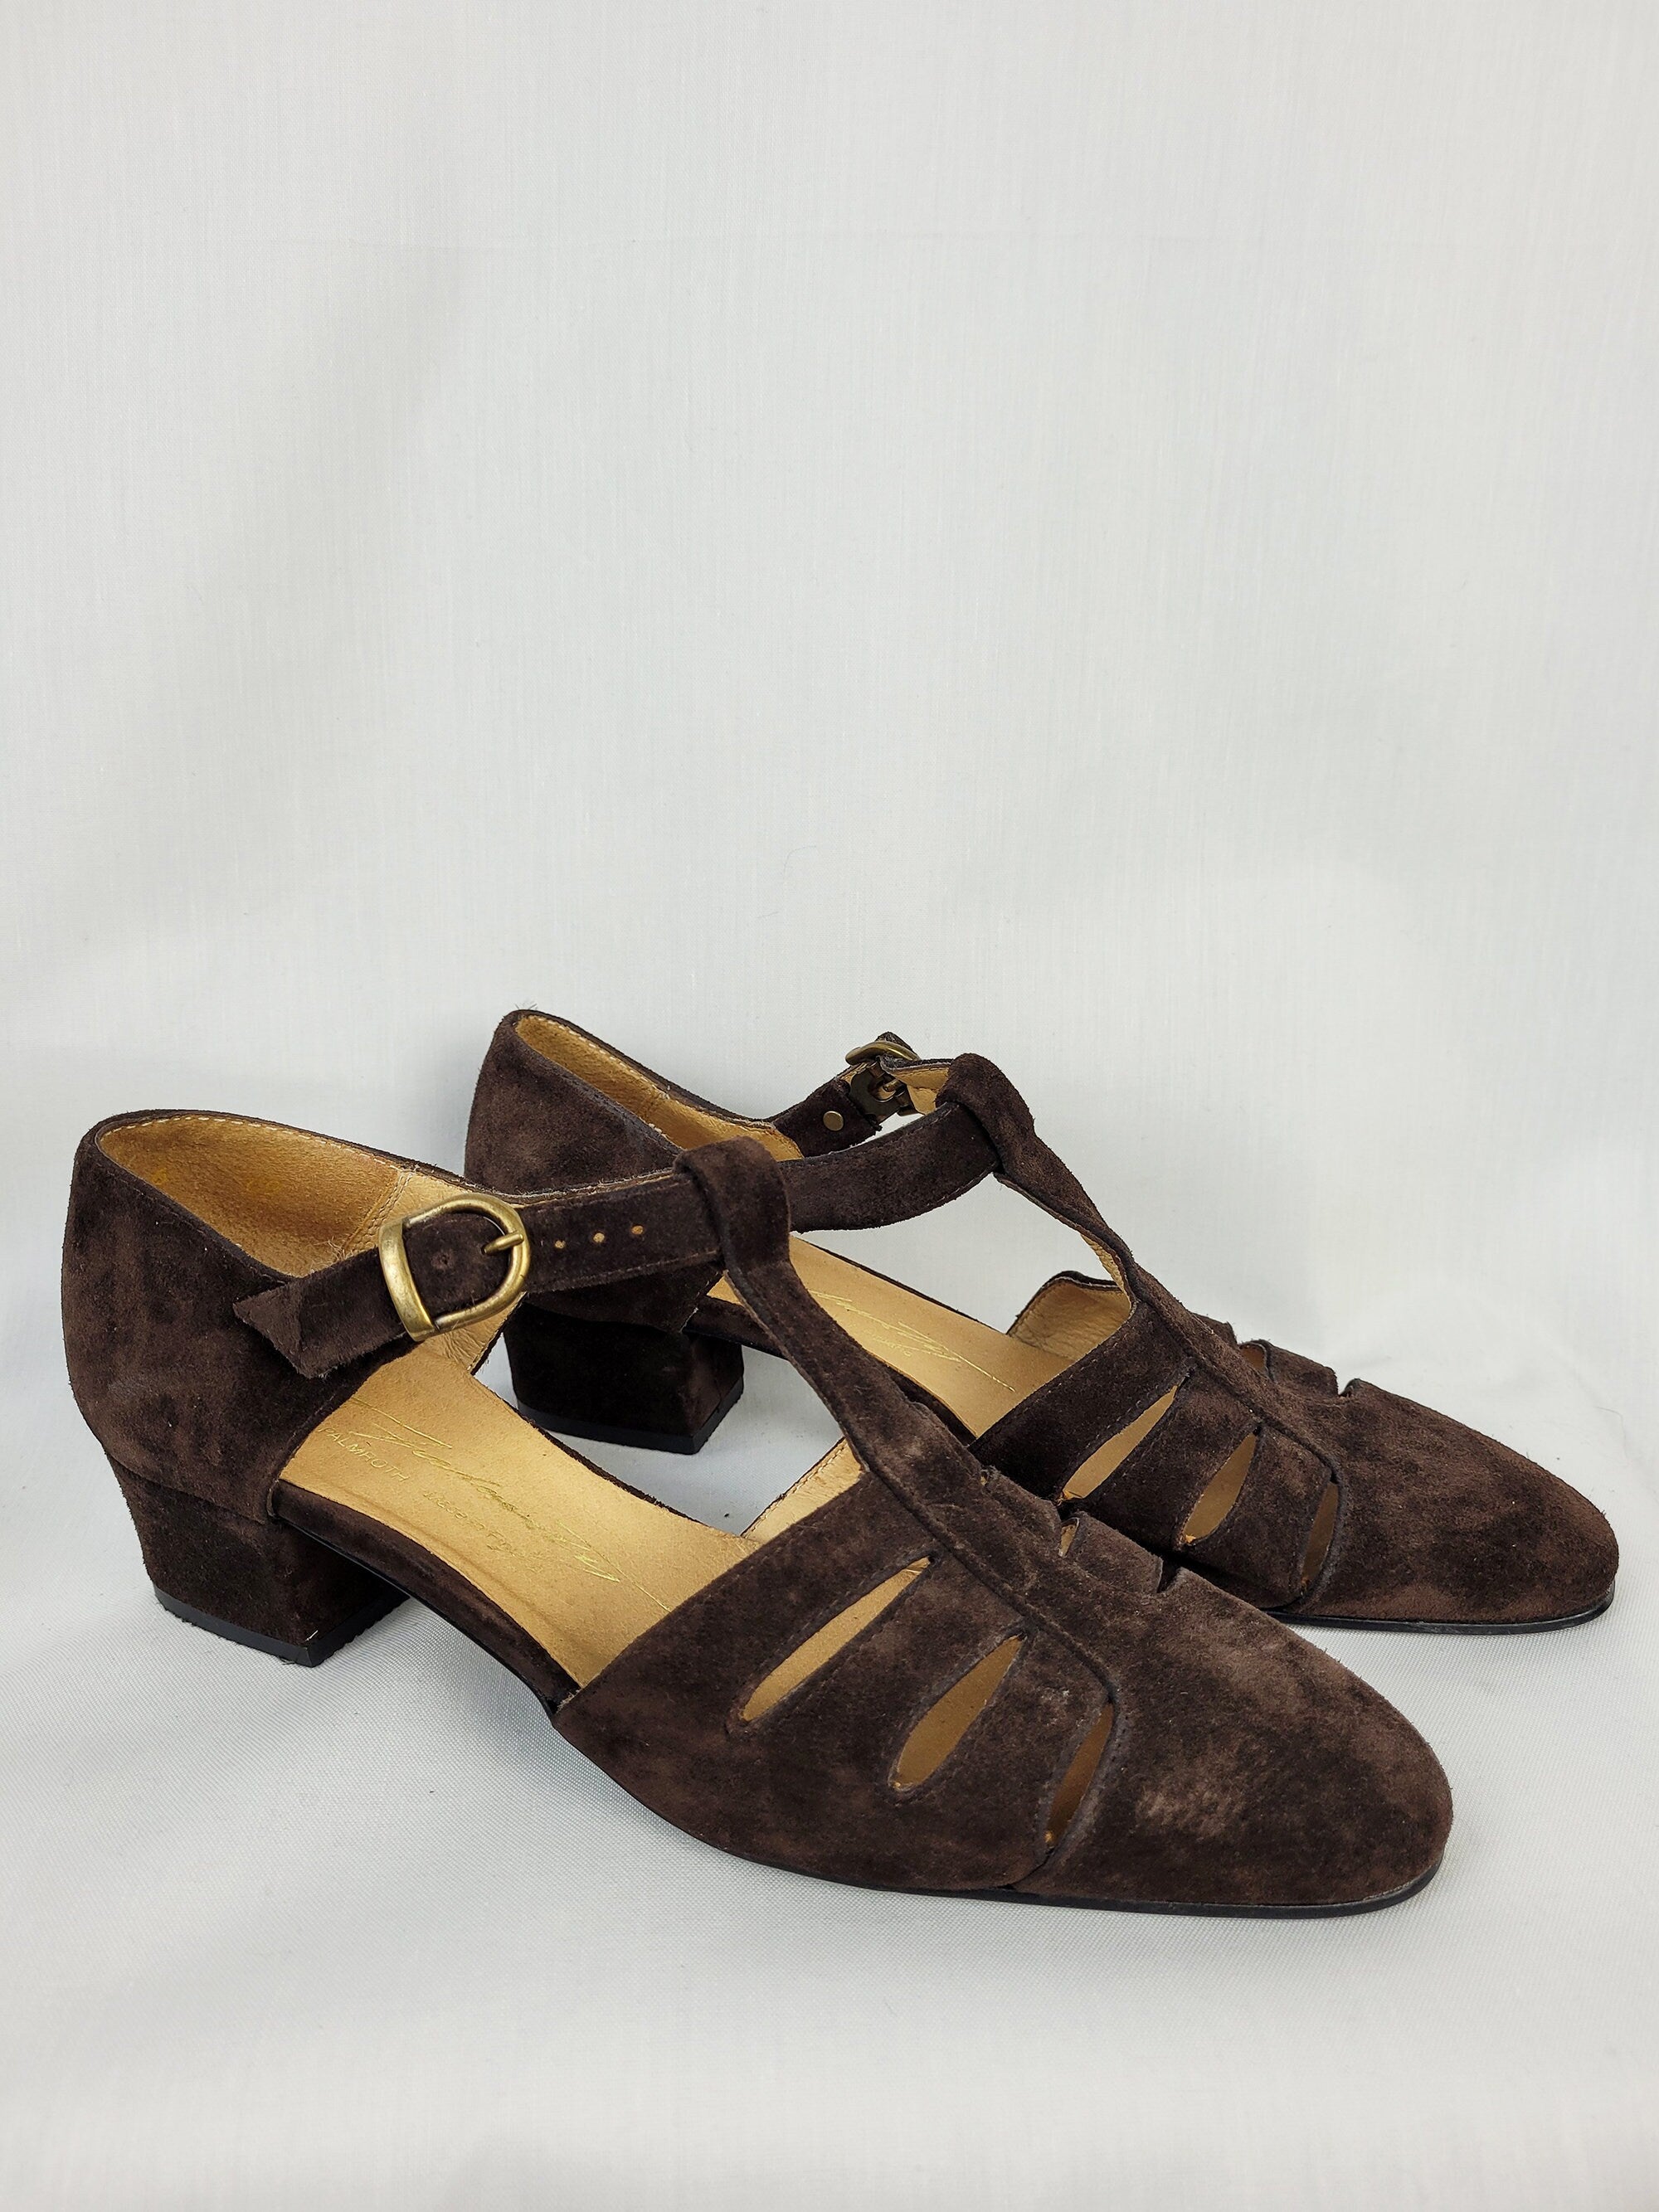 Vintage 80s mid heel brown suede sandals shoes